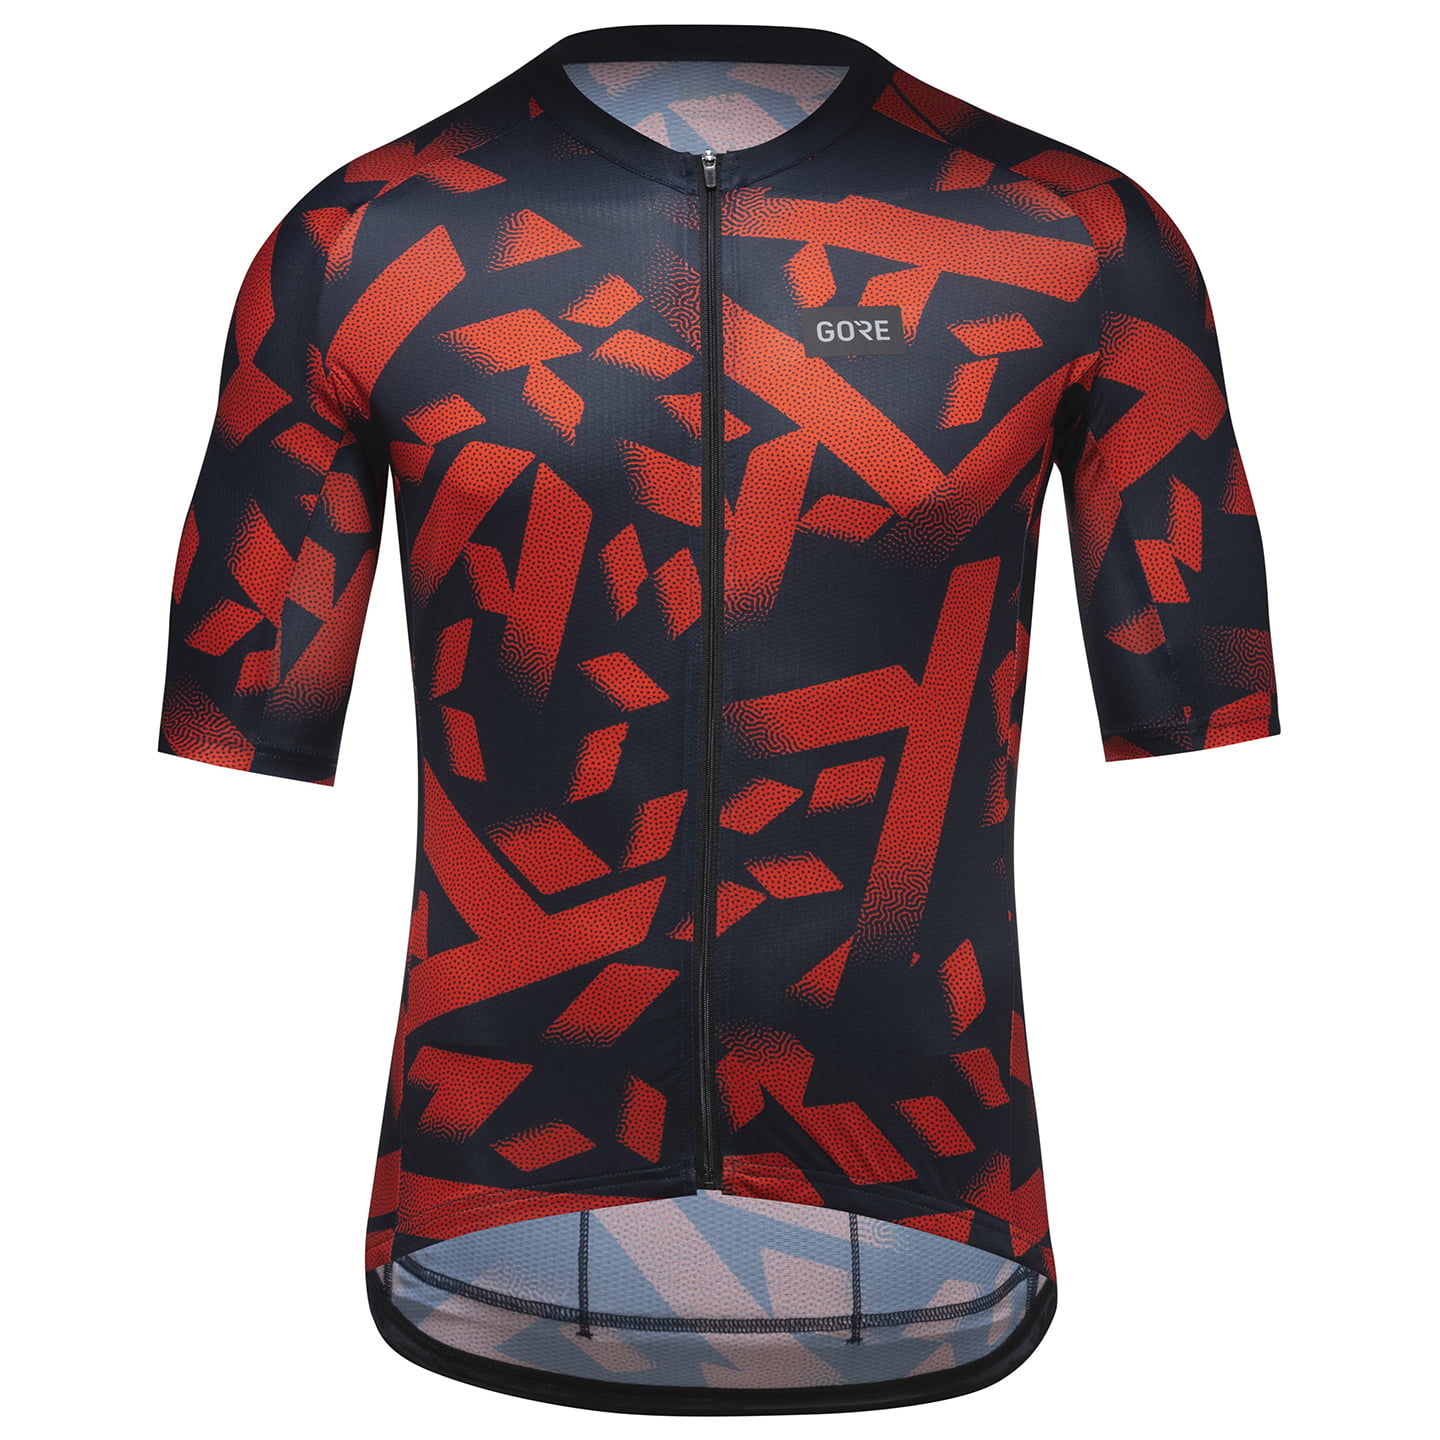 Spirit Signal Camo Short Sleeve Jersey Short Sleeve Jersey, for men, size M, Cycling jersey, Cycling clothing